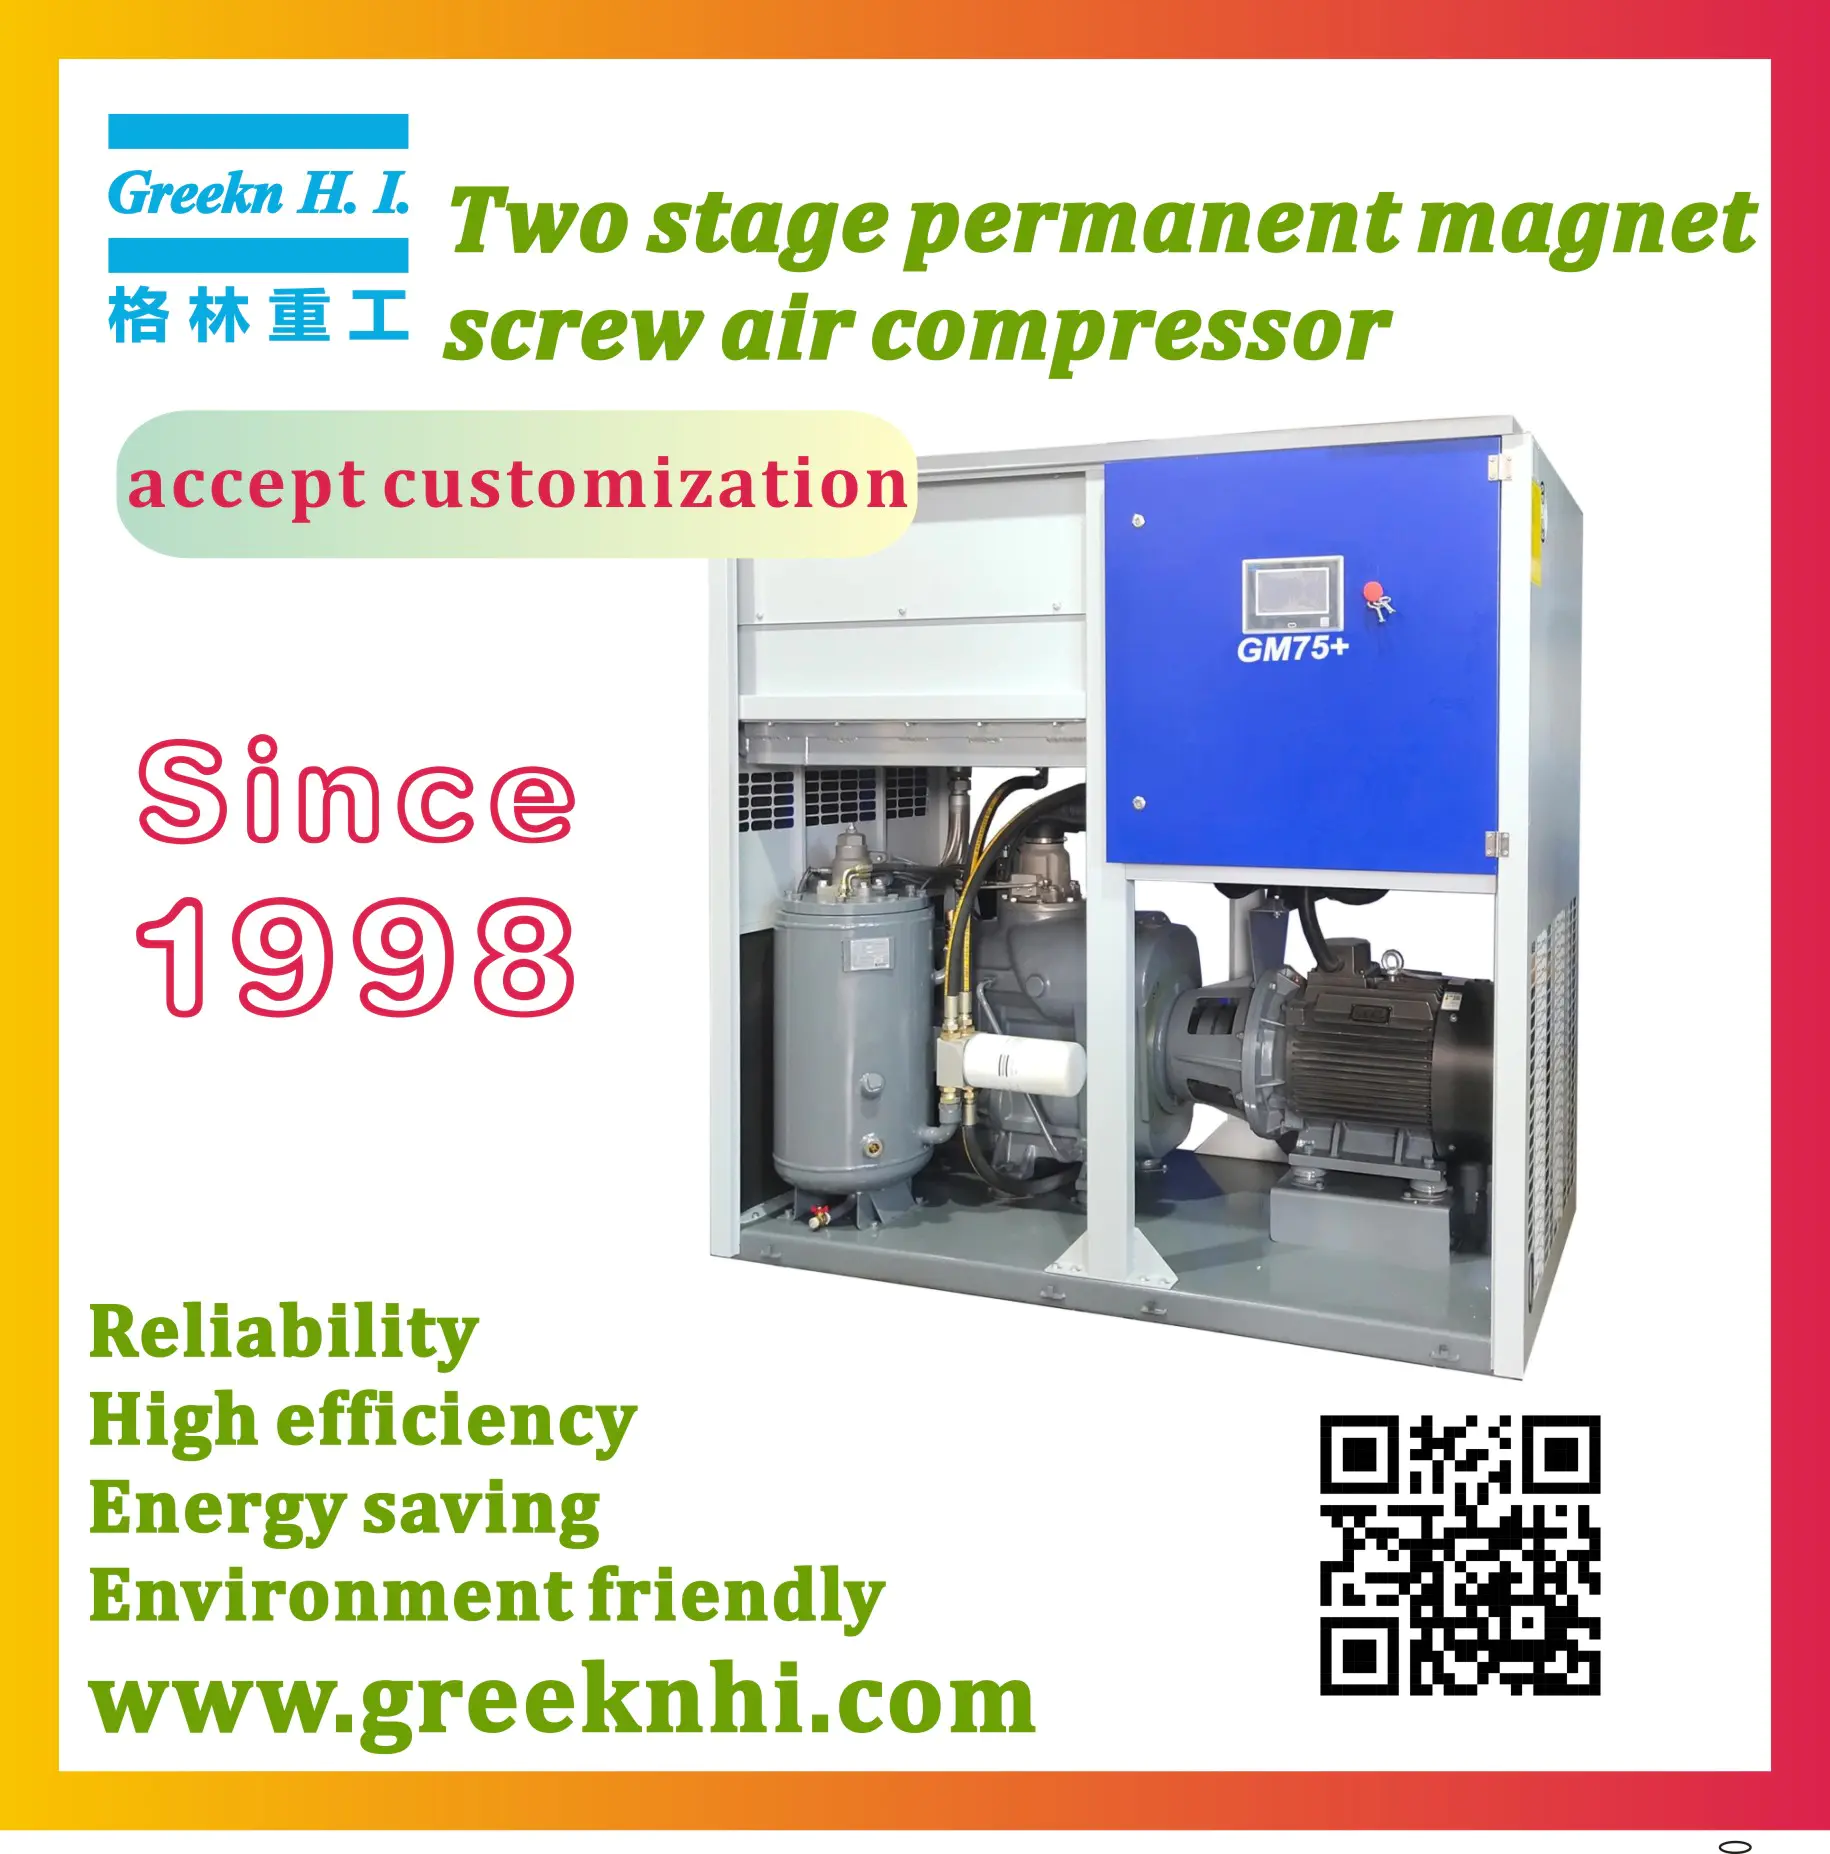 Greenair GM75+ 75kW Variable Speed Permanent Magnet Motor Screw Air Compressor